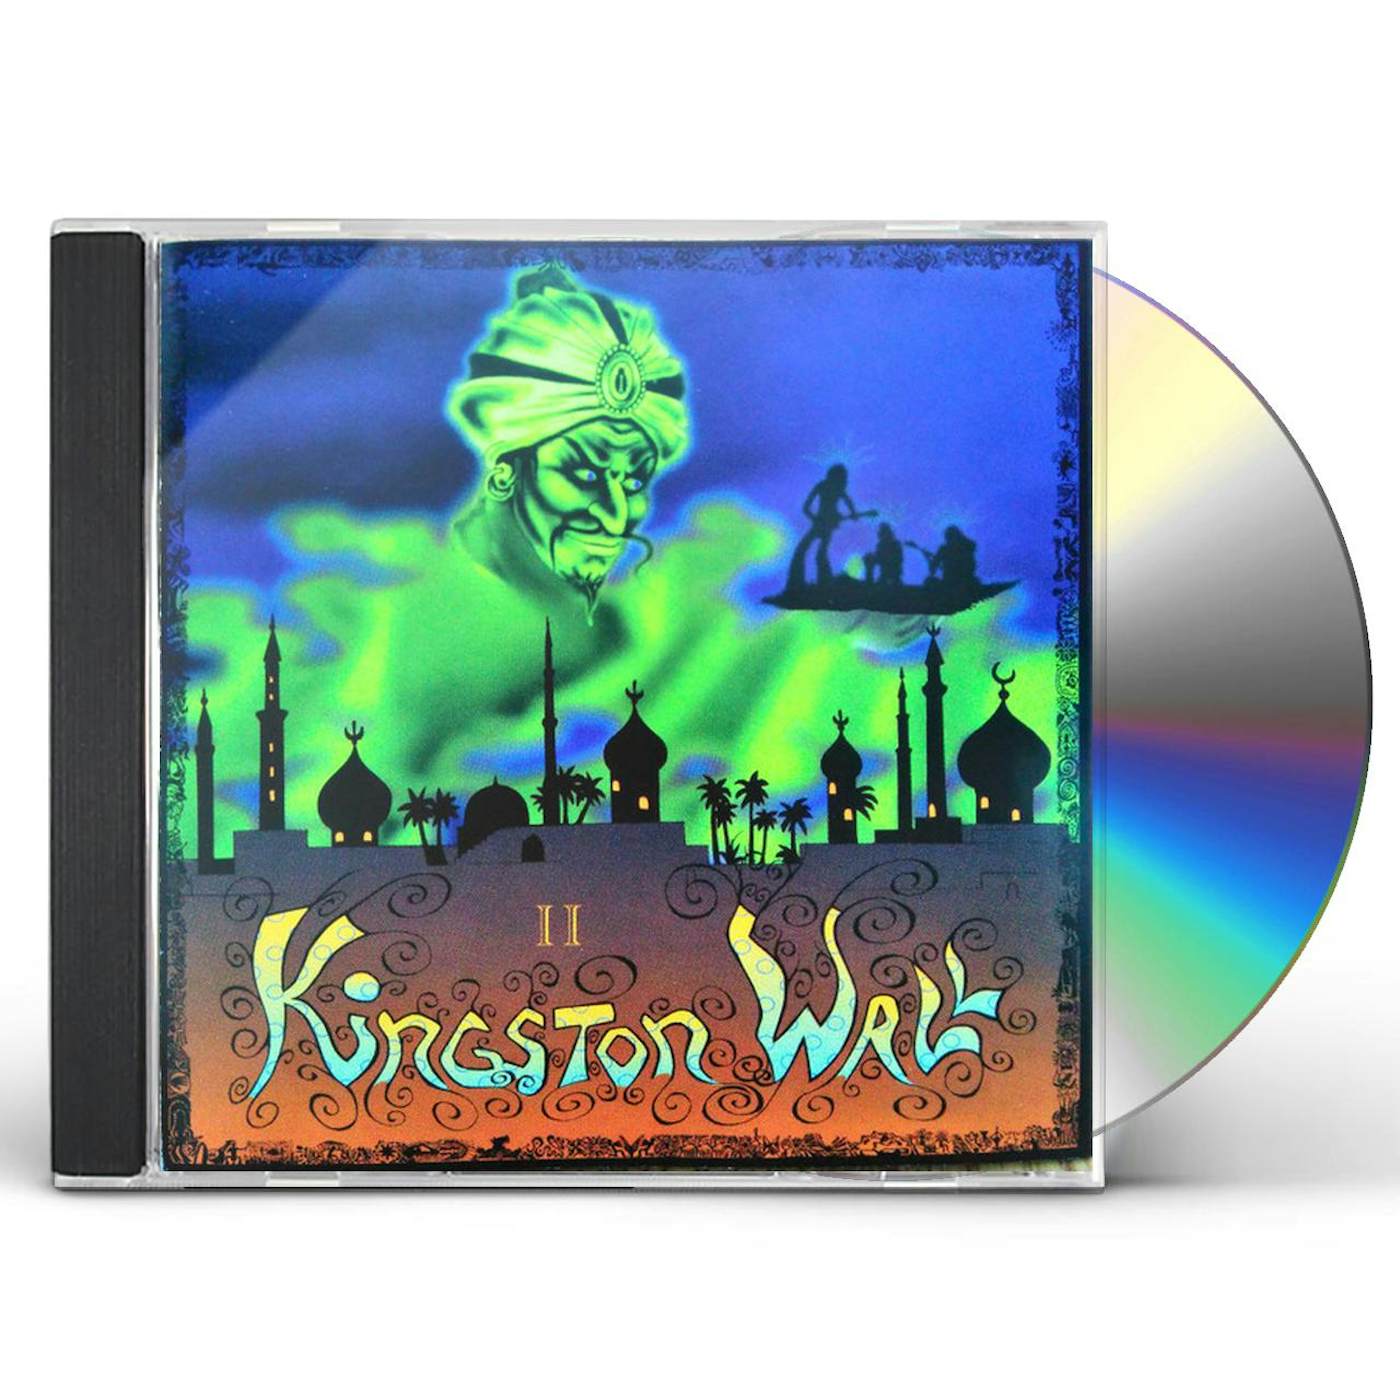 Kingston Wall II CD